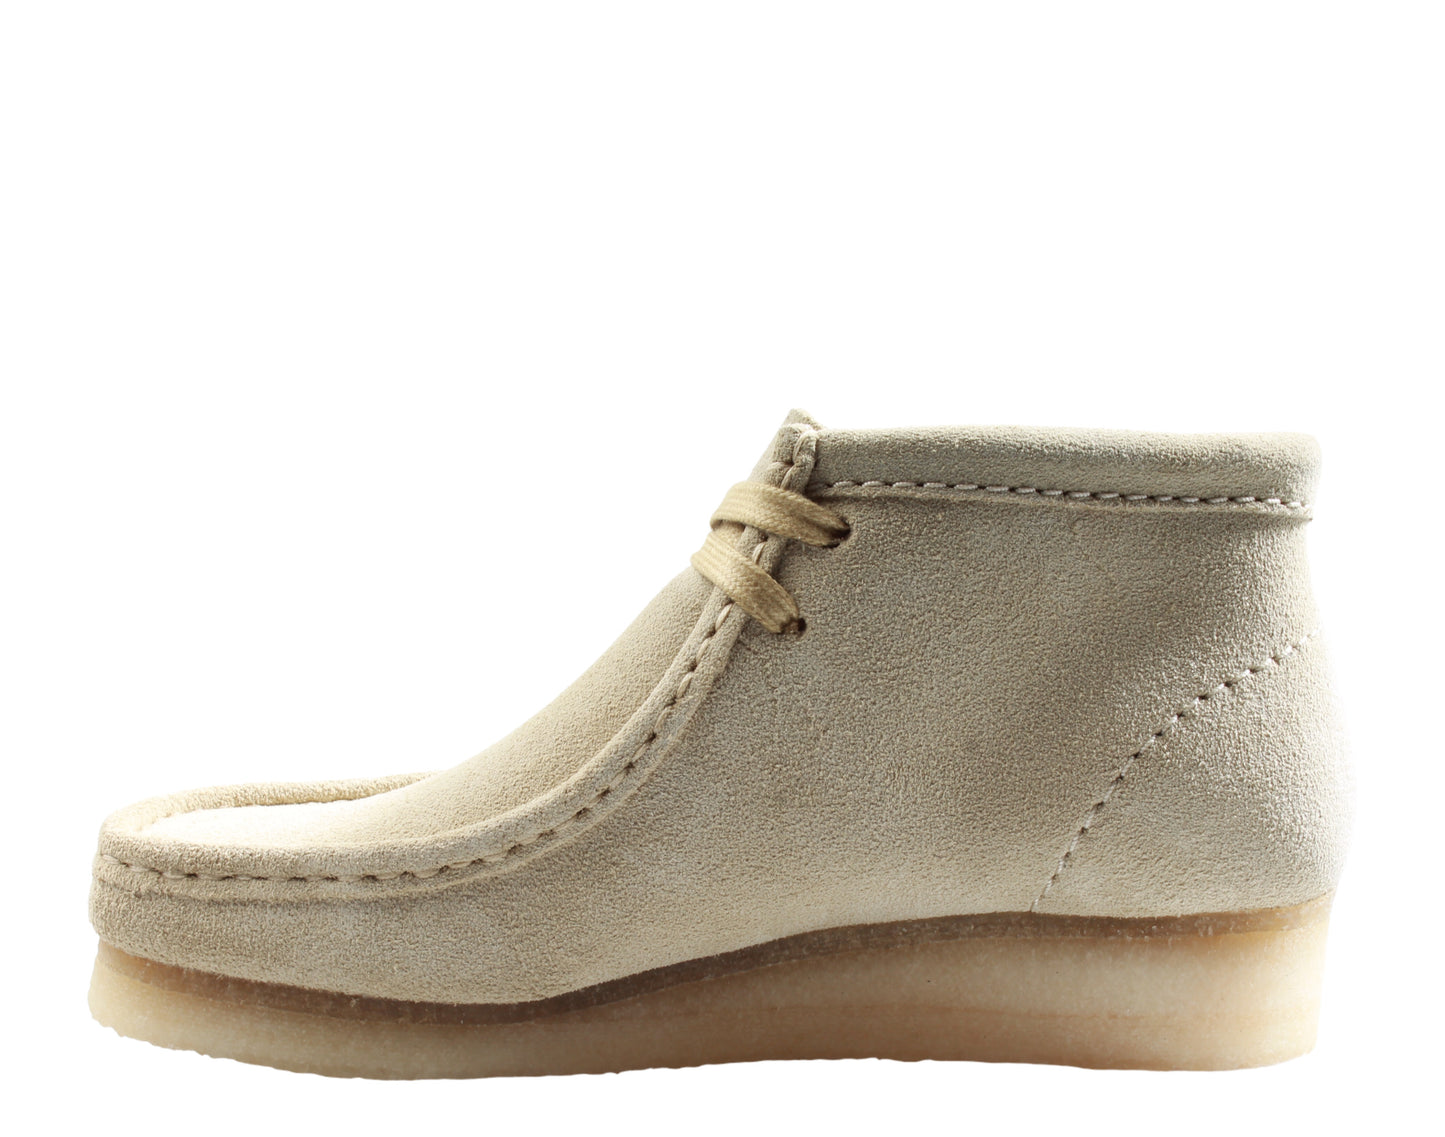 Clarks Originals Wallabee Boot Women's Casual Shoes